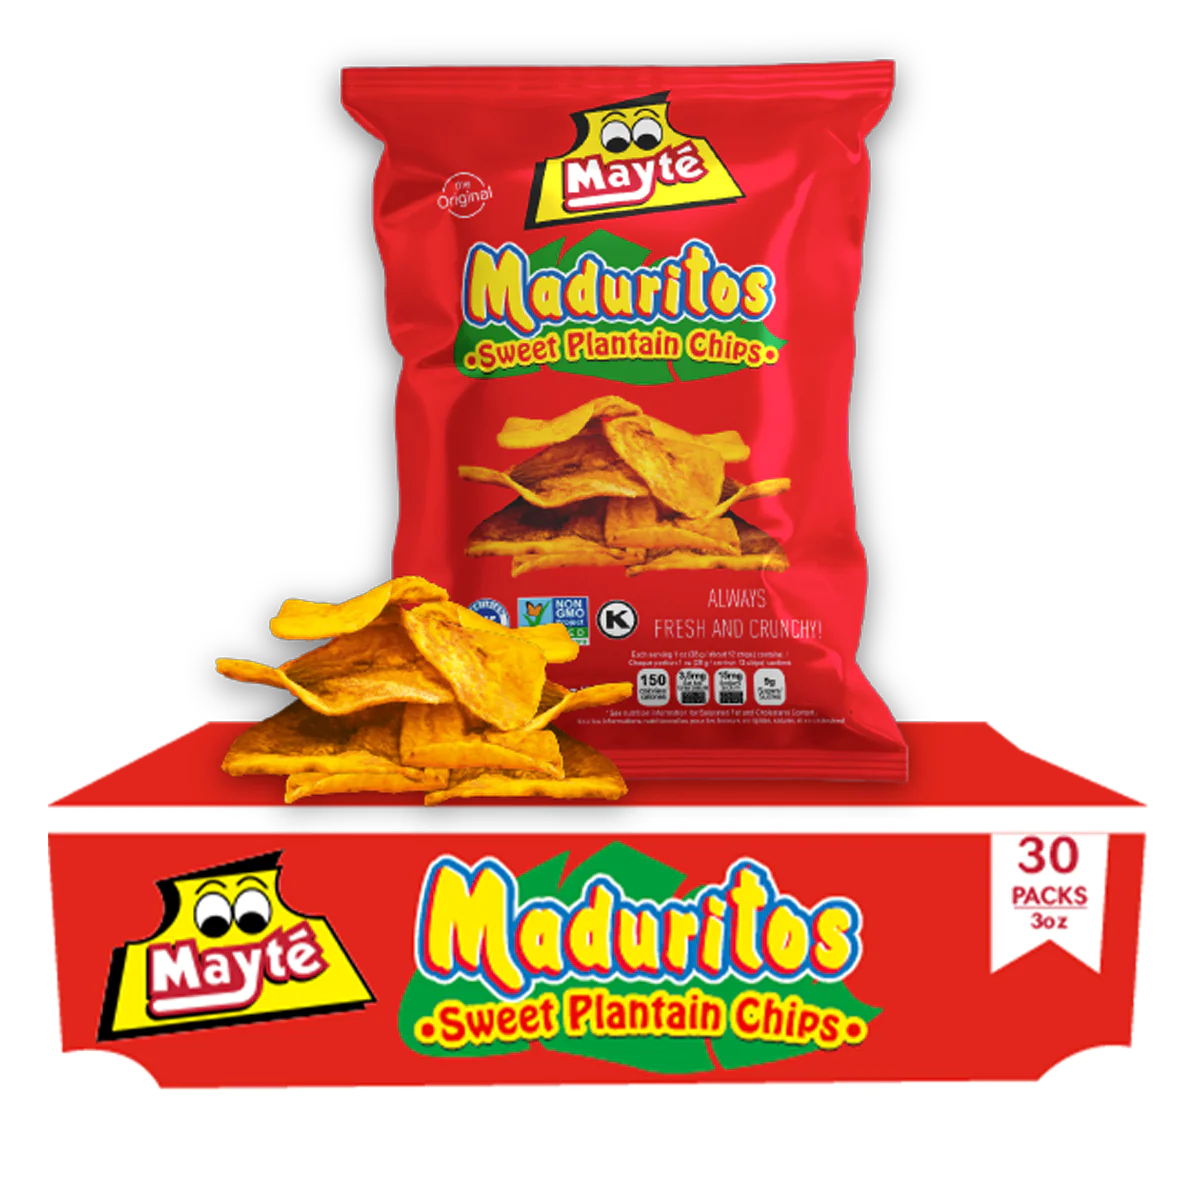 Mayte Maduritos || Sweet Plantain Chips || 3 oz / 85 g || Always Crunchy